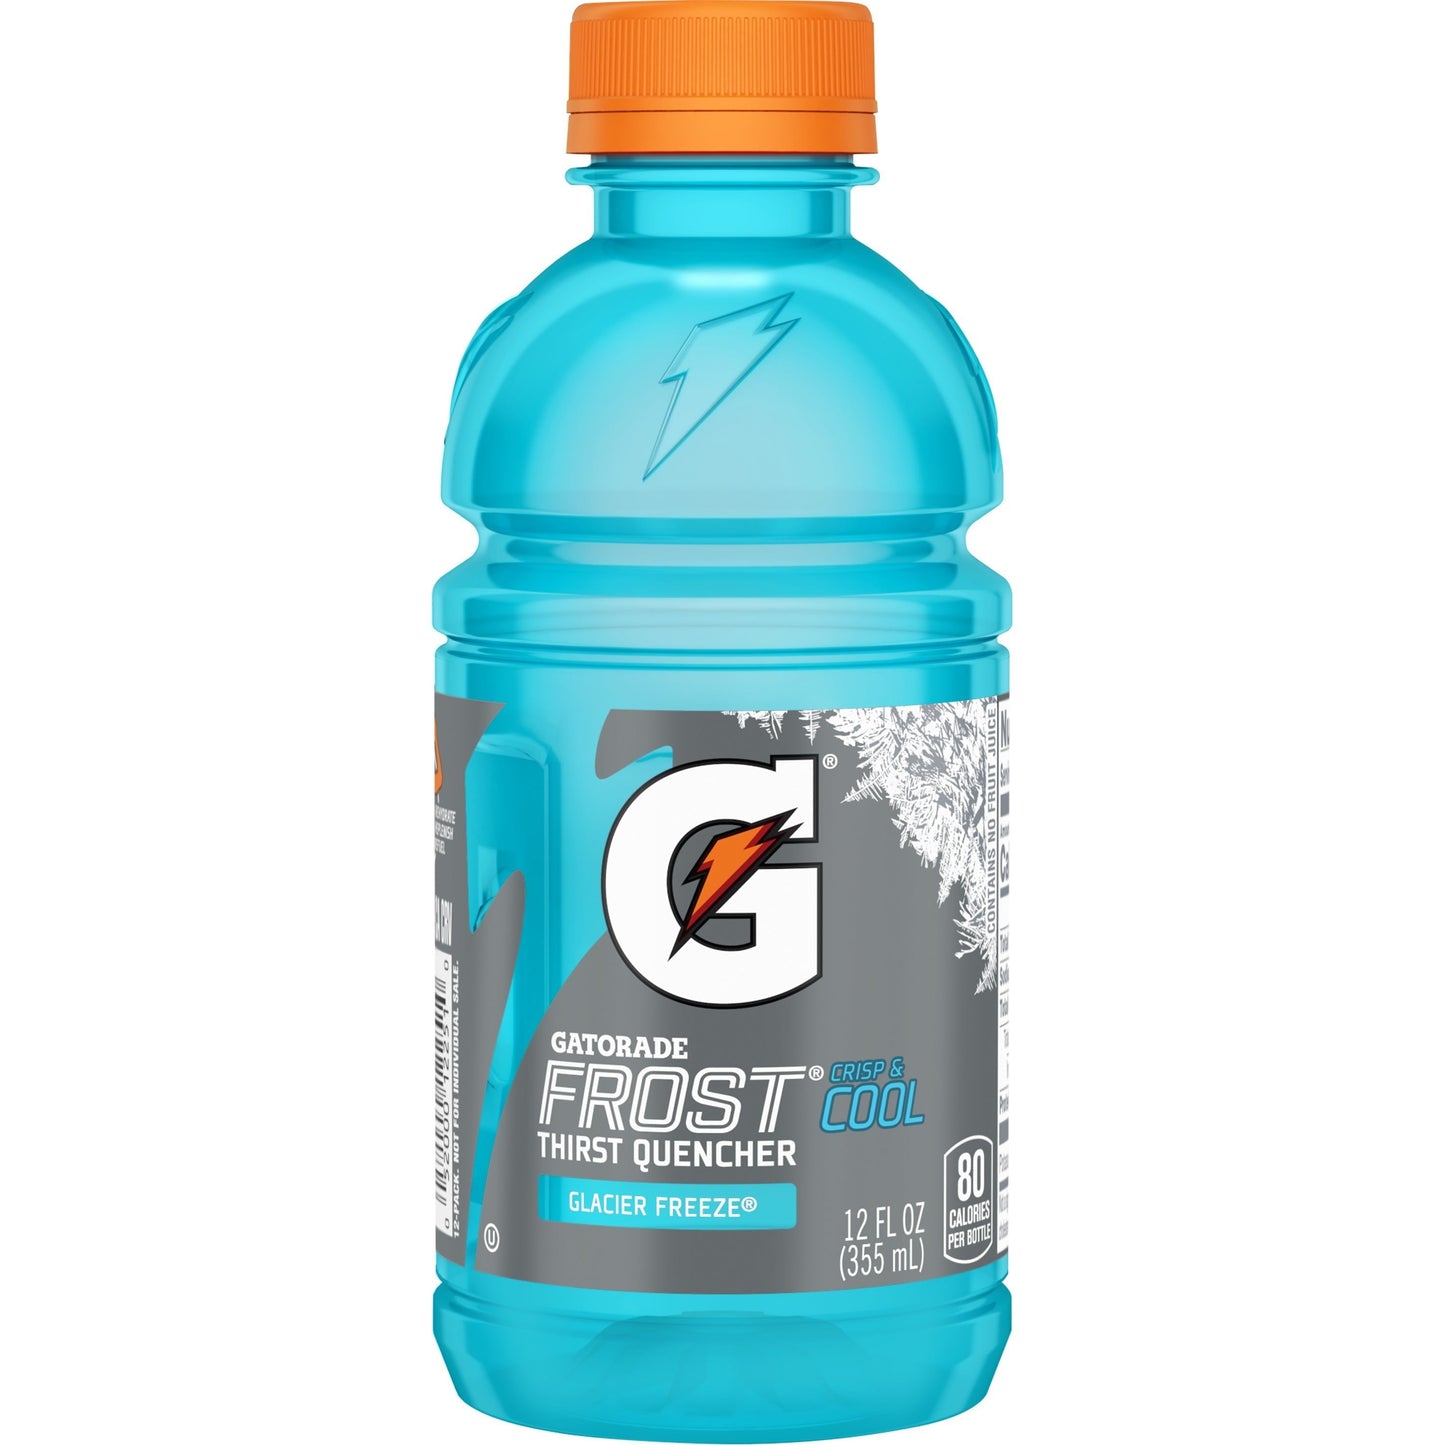 Gatorade Frost Thirst Quencher Sports Drink, Glacier Freeze, 12 oz, 12 Pack Bottles